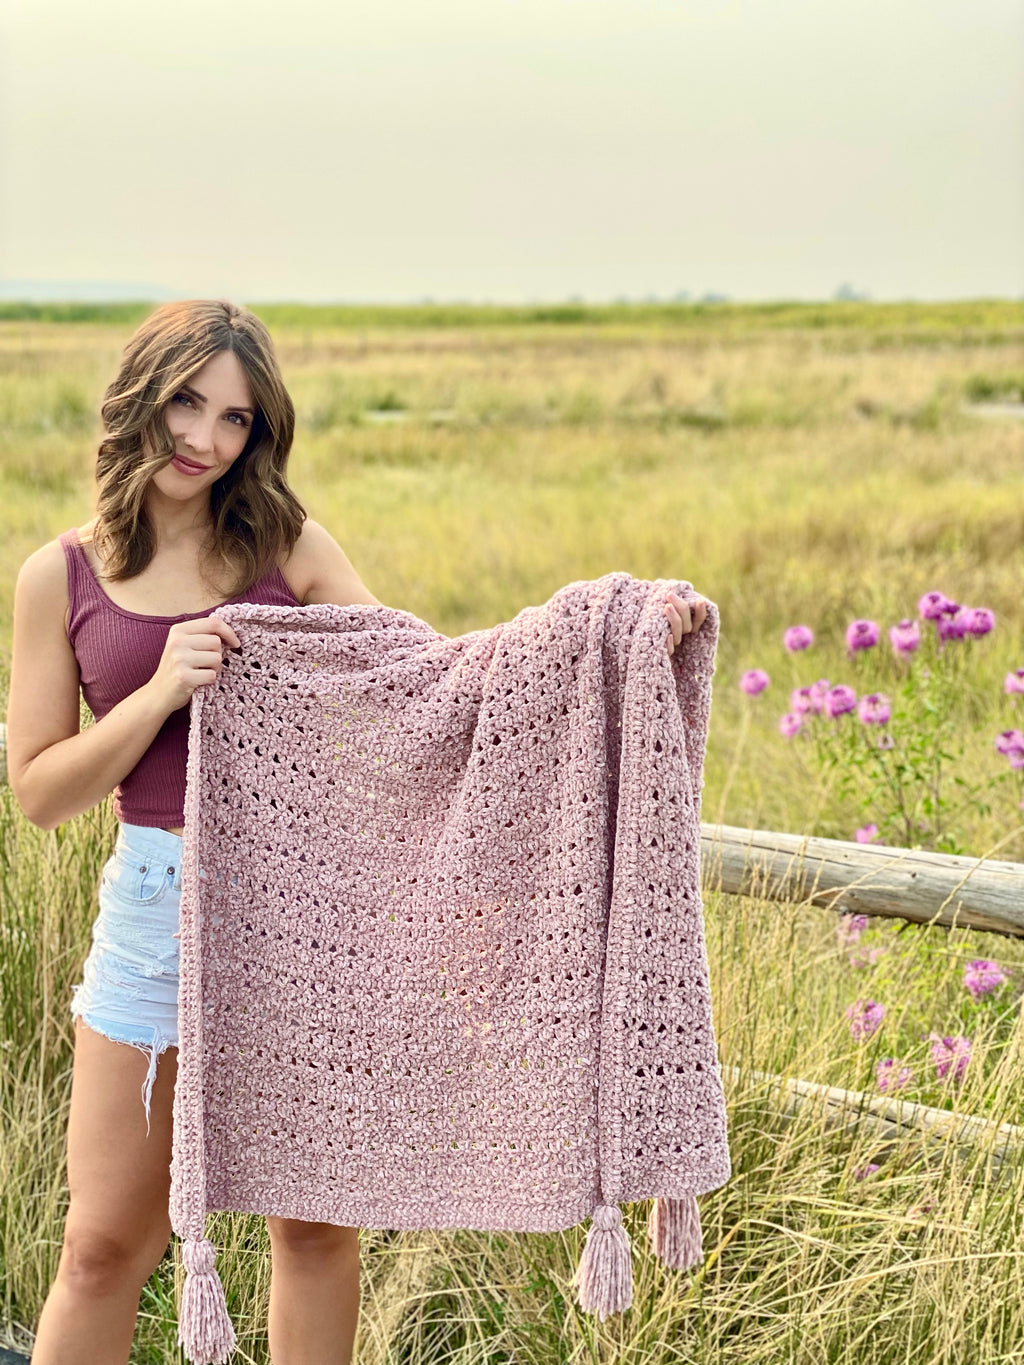 Crochet Kit - Flowers in the Sand Throw – Lion Brand Yarn